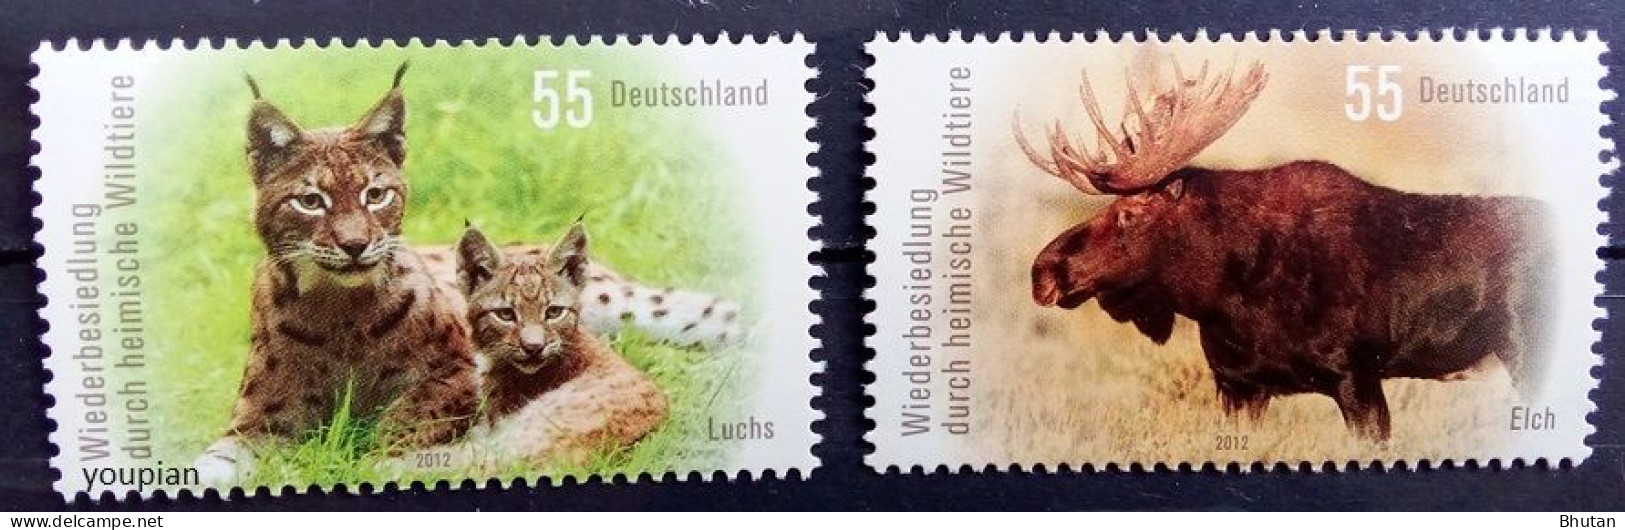 Germany 2012, Animals - Lynx And Elk, MNH Stamps Set - Ongebruikt